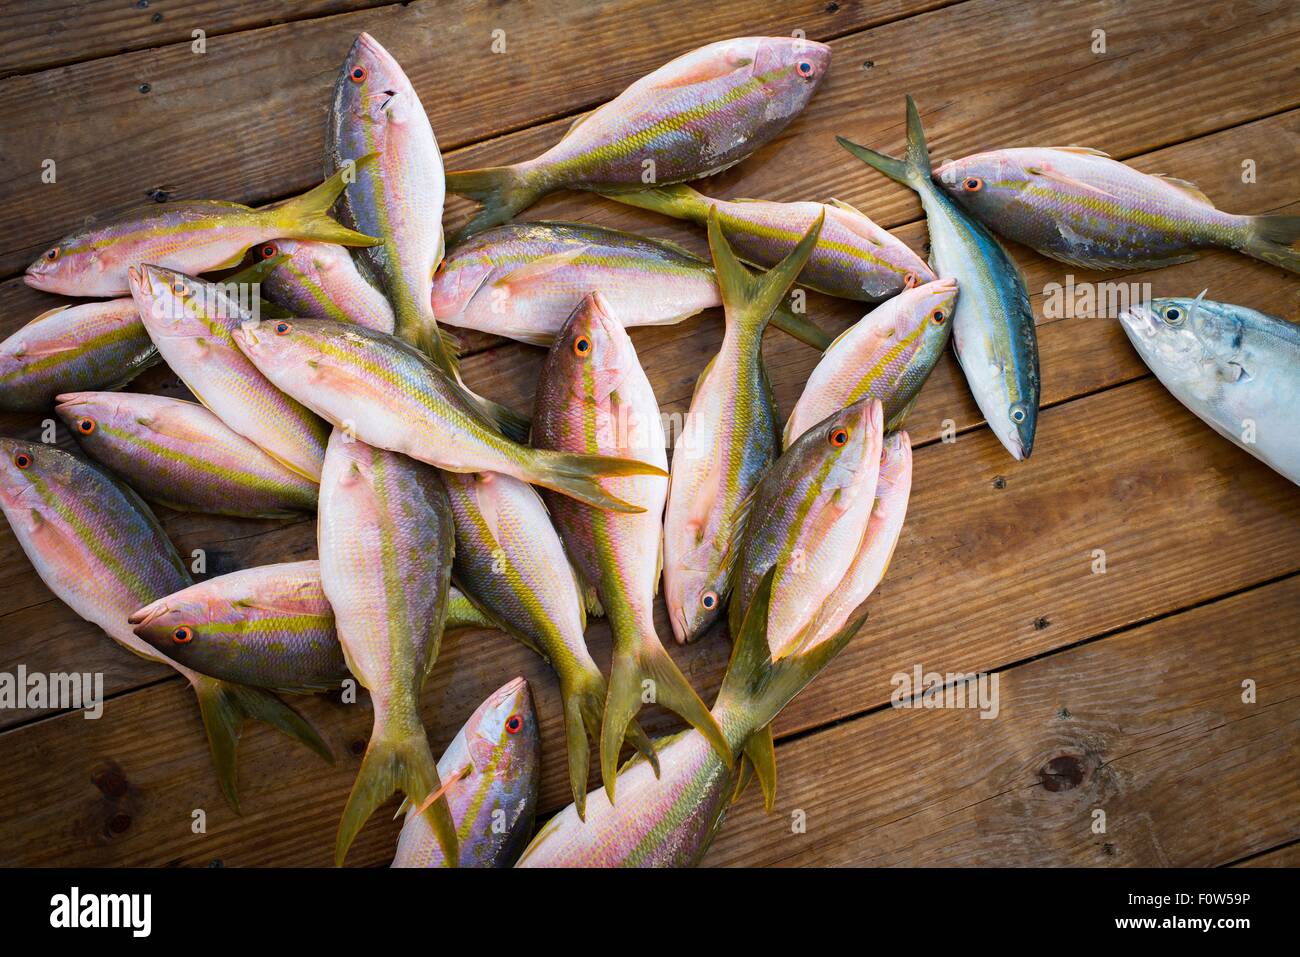 Caught snappers and yellowtail fish on wooden pier, Islamorada, Florida, USA Stock Photo